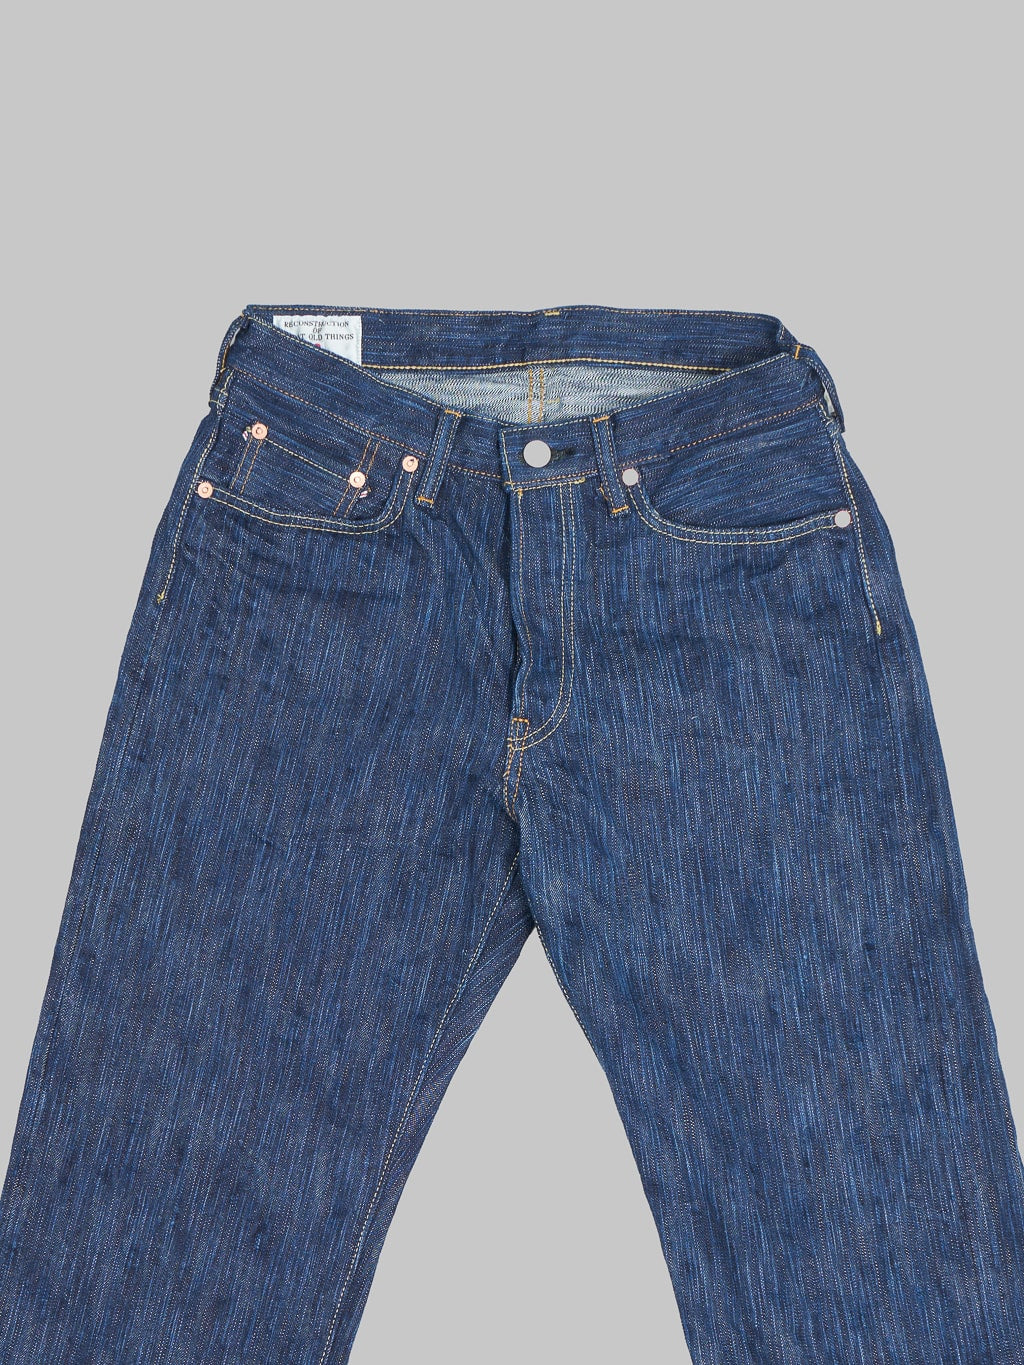 Studio dartisan tokushima awa shoai regular straight jeans waist view